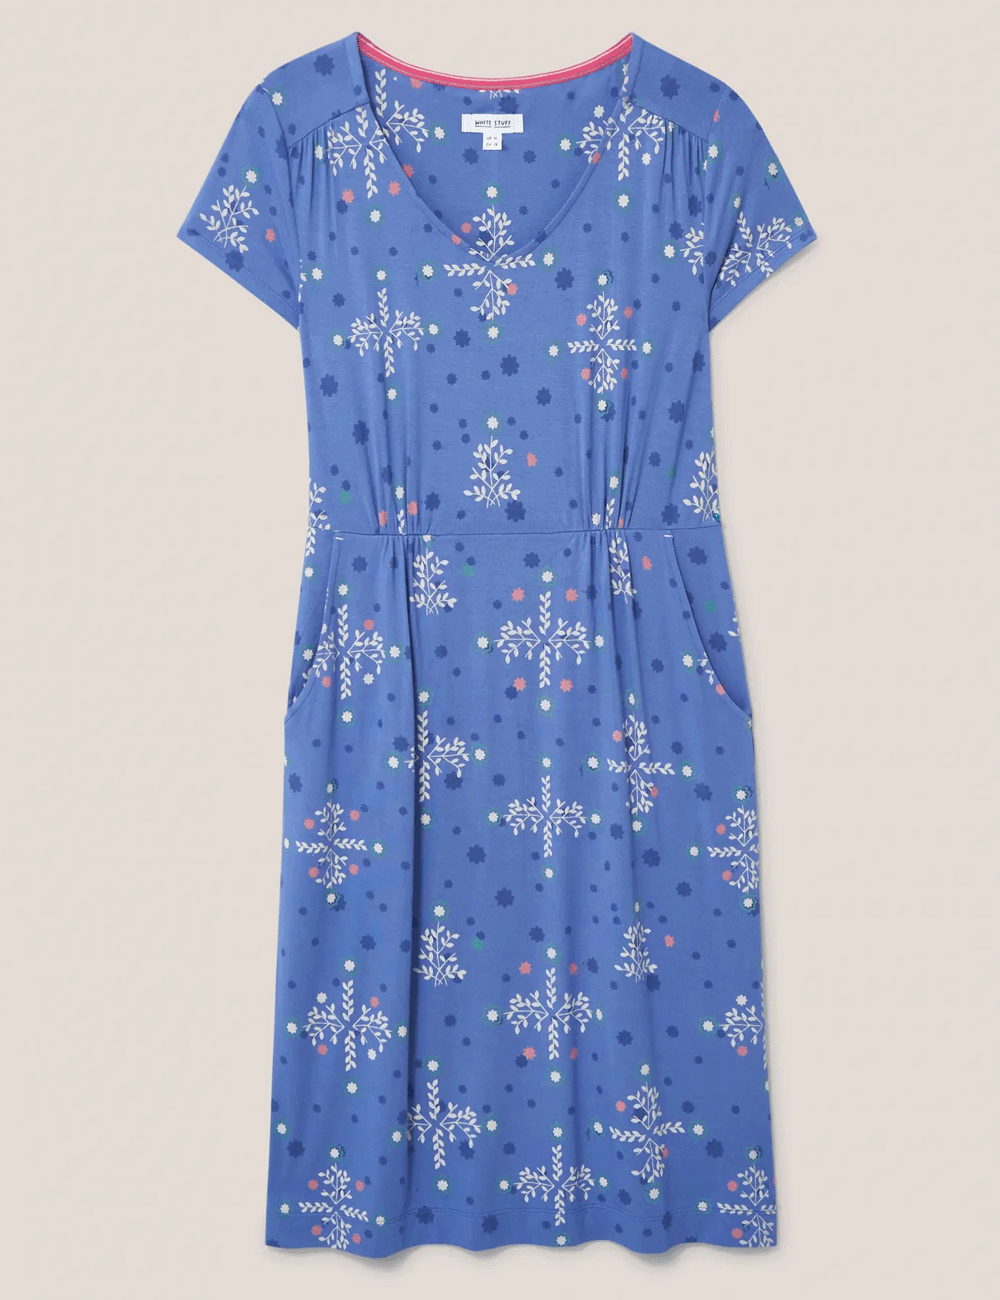 White Stuff's Tallie Jersey Dress in Blue Multi on a grey background